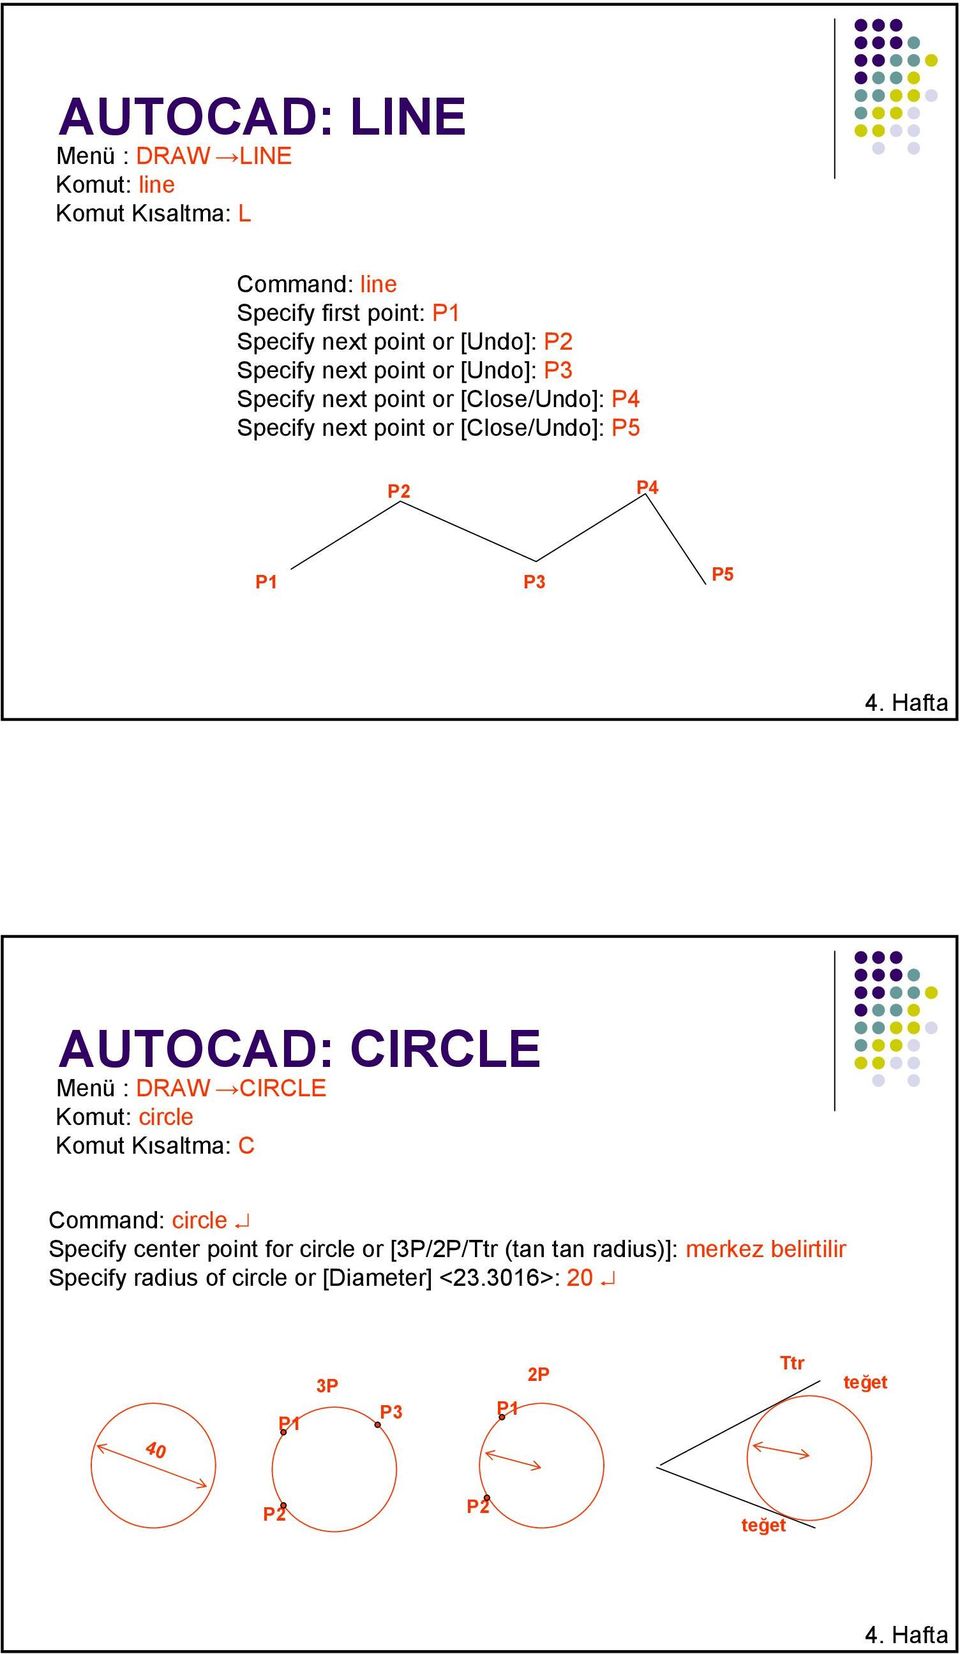 Hafta AUTOCAD: CIRCLE Menü : DRAW CIRCLE Komut: circle Komut Kısaltma: C Command: circle Specify center point for circle or